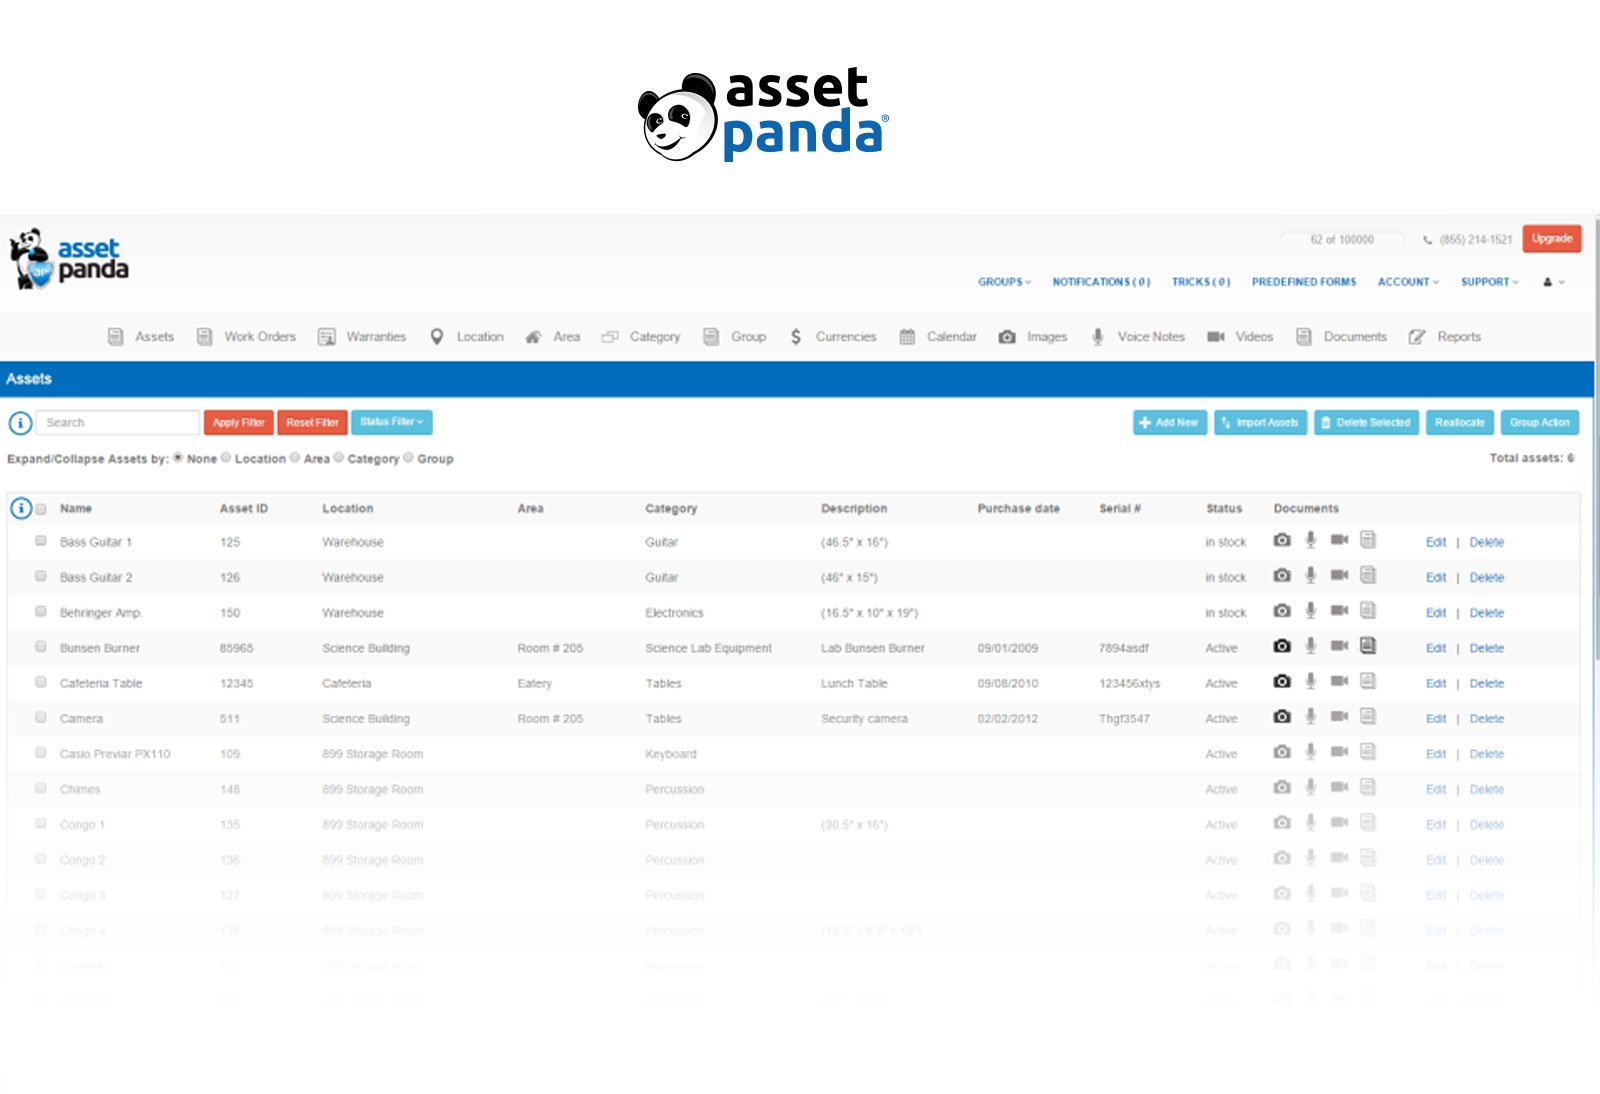 Example of Asset Panda's interface.